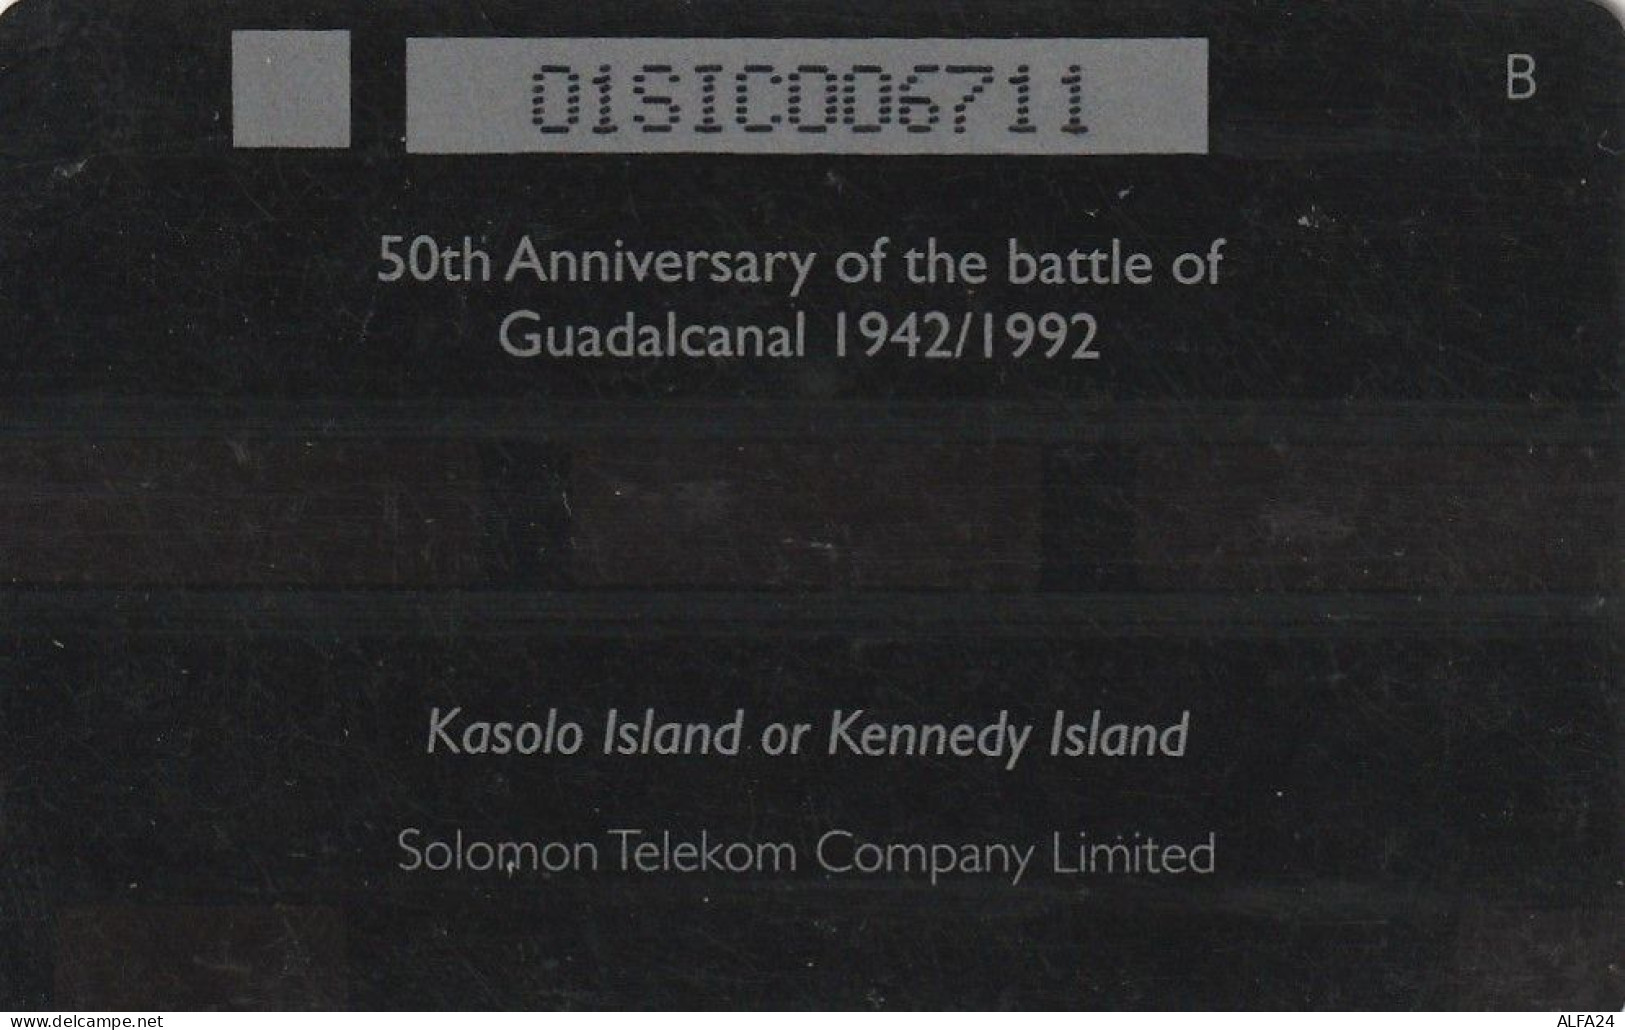 PHONE CARD SOLOMON ISLANDS (E76.28.7 - Salomon